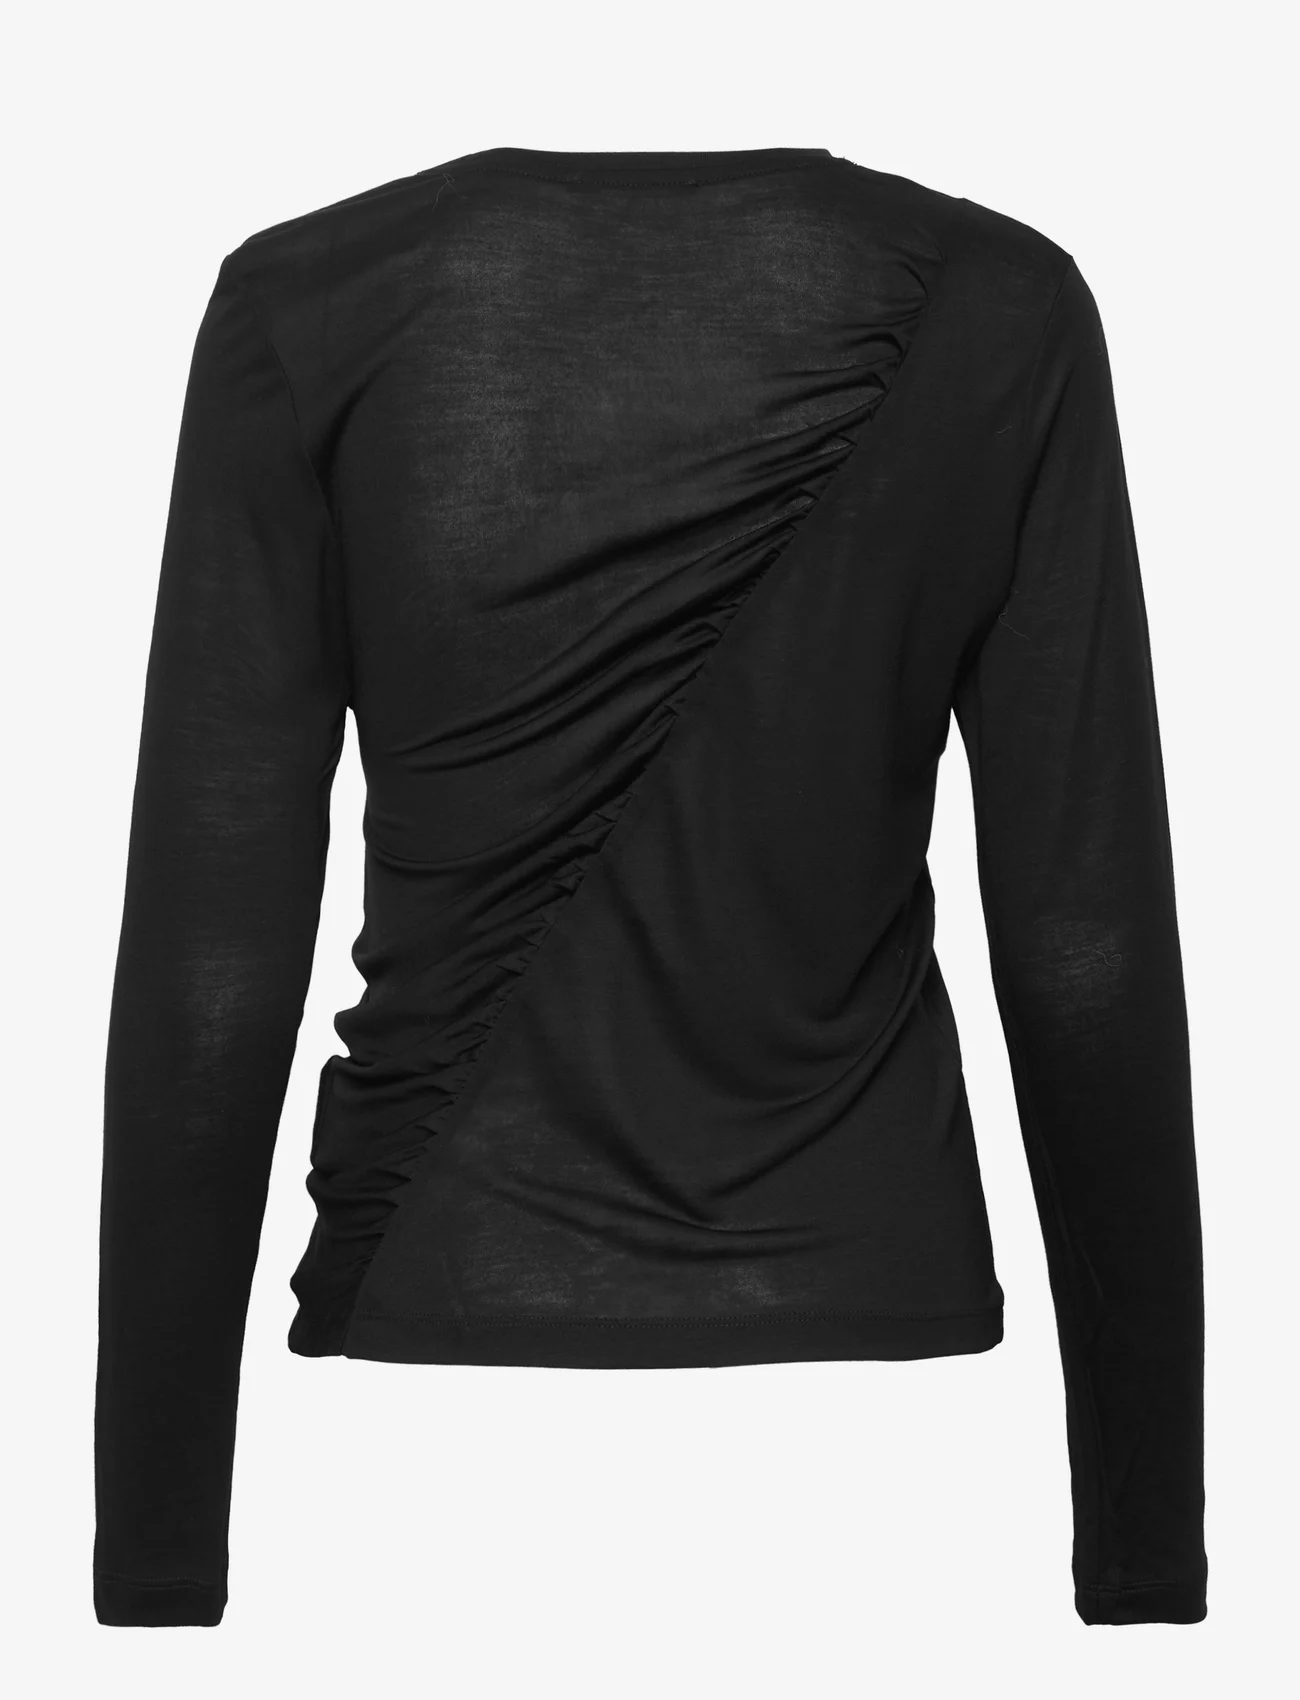 Bruuns Bazaar - Katka Lise blouse - långärmade toppar - black - 1